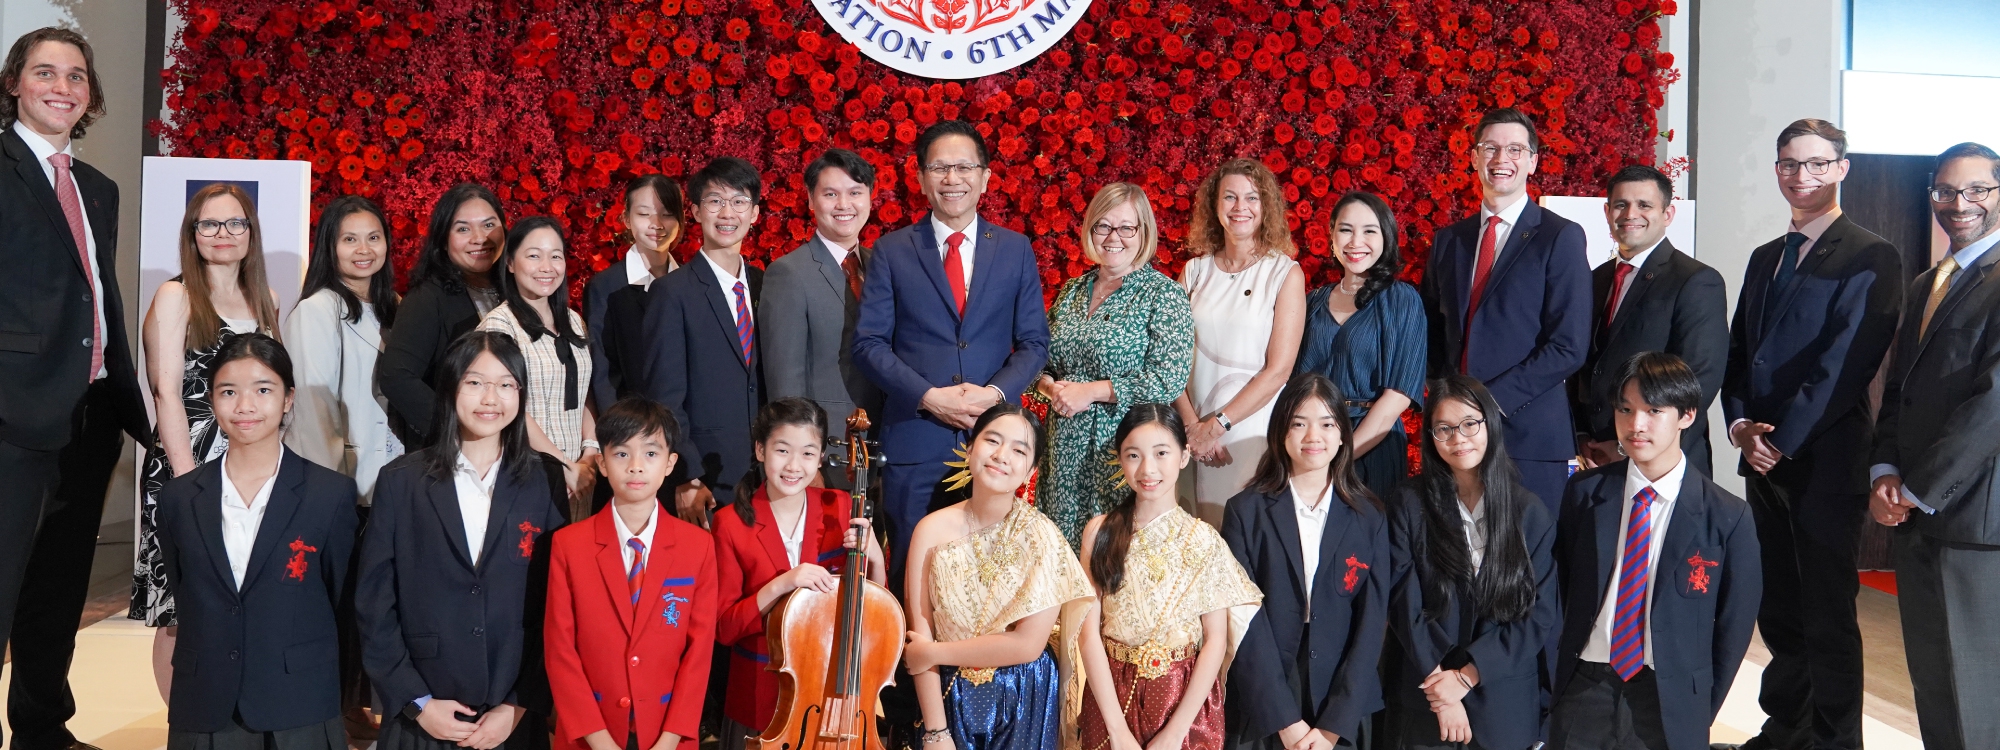 King’s Bangkok celebrated the coronation at the British Embassy reception